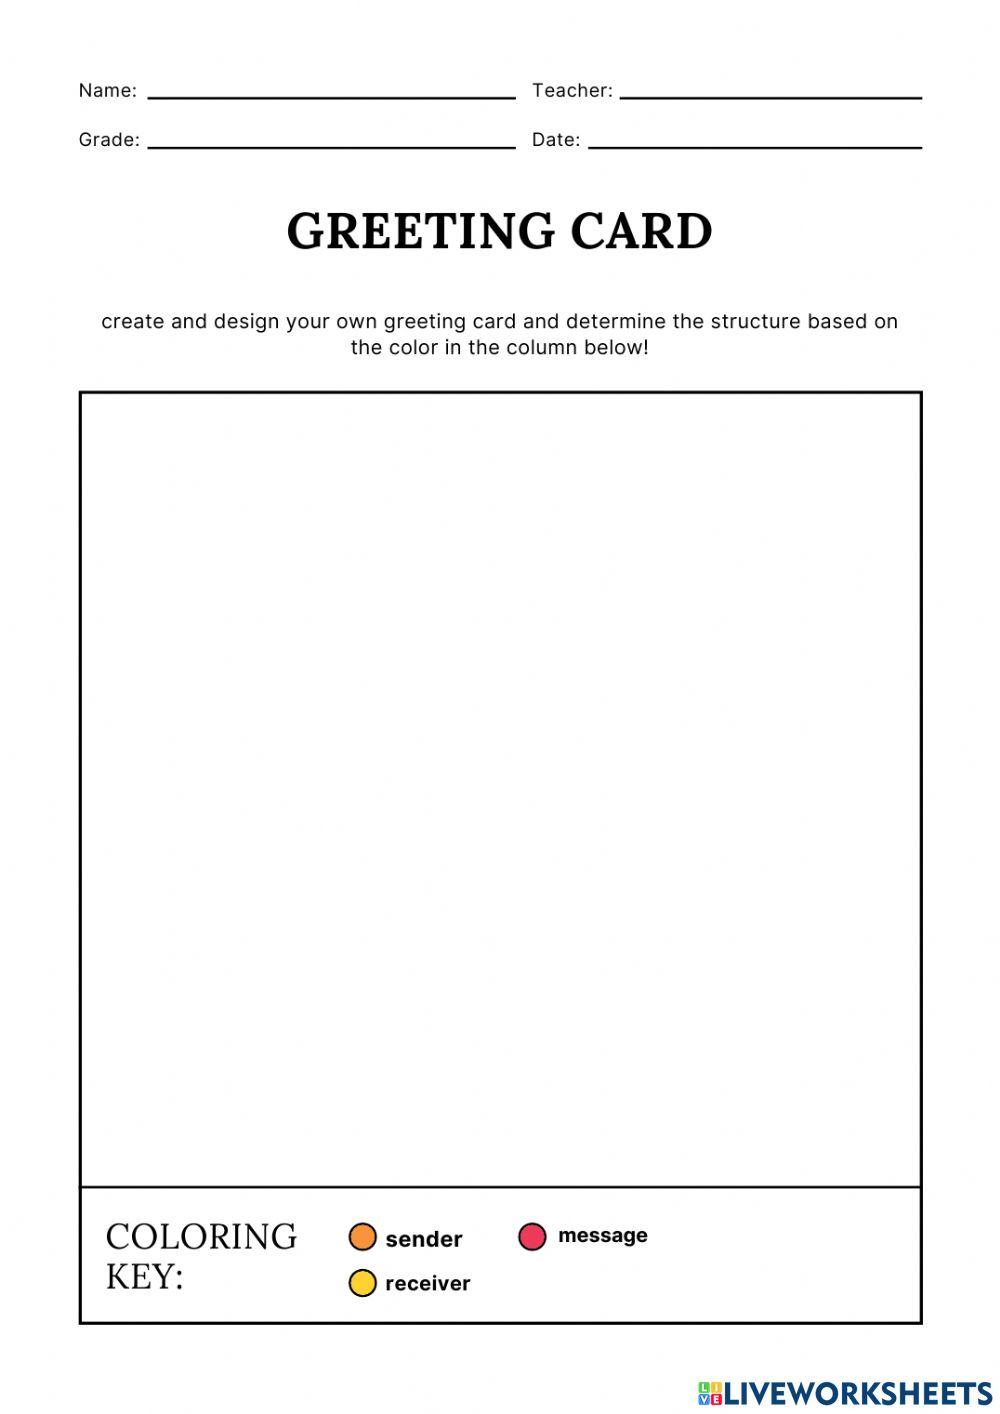 Greeting card